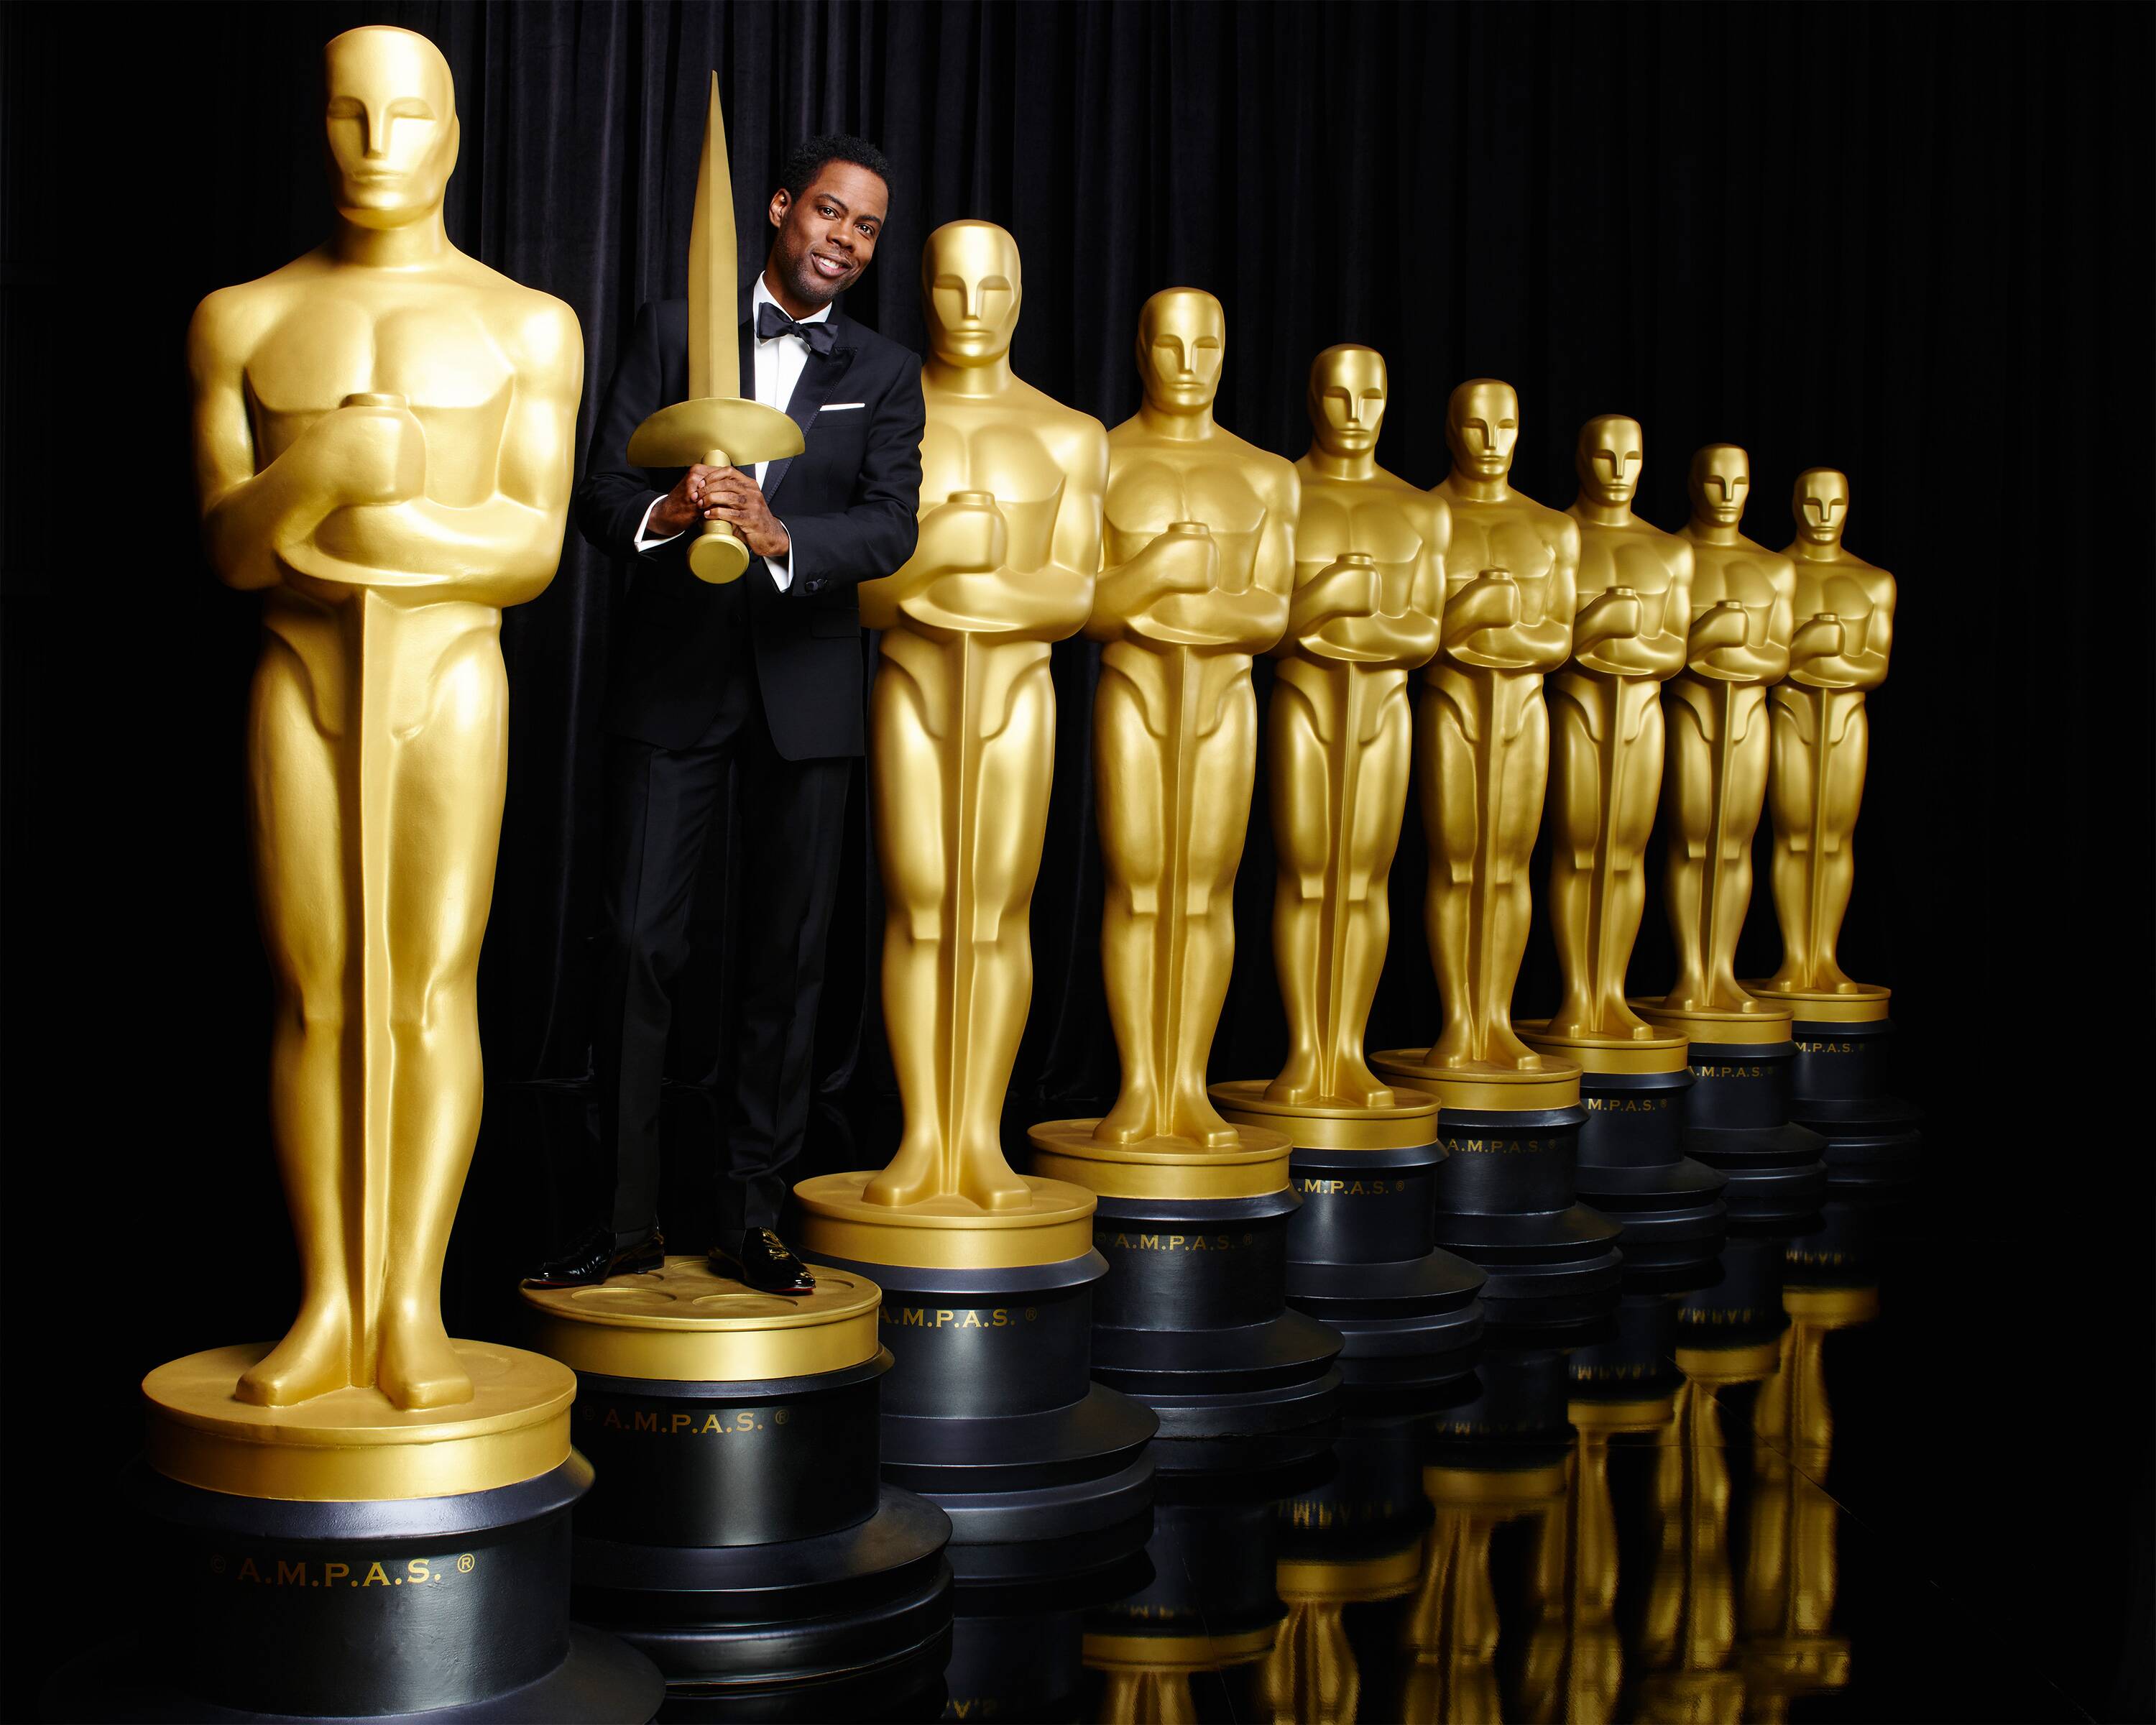 Chris Rock hosts the Oscars, not the IFCA Awards